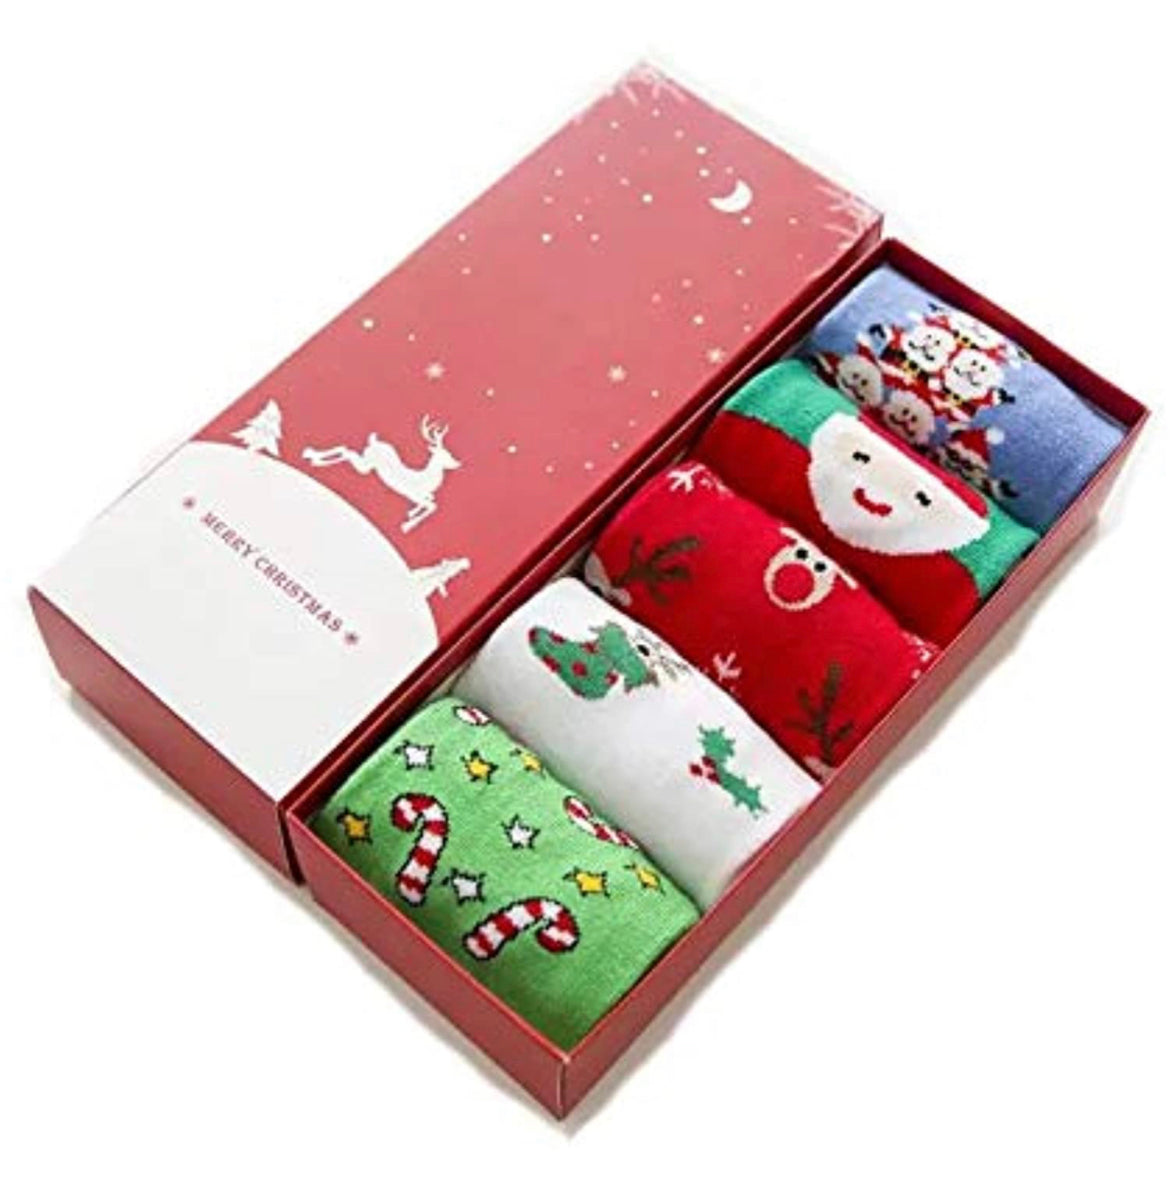 Festive Socks! Packaged neatly in a lovely festive box!